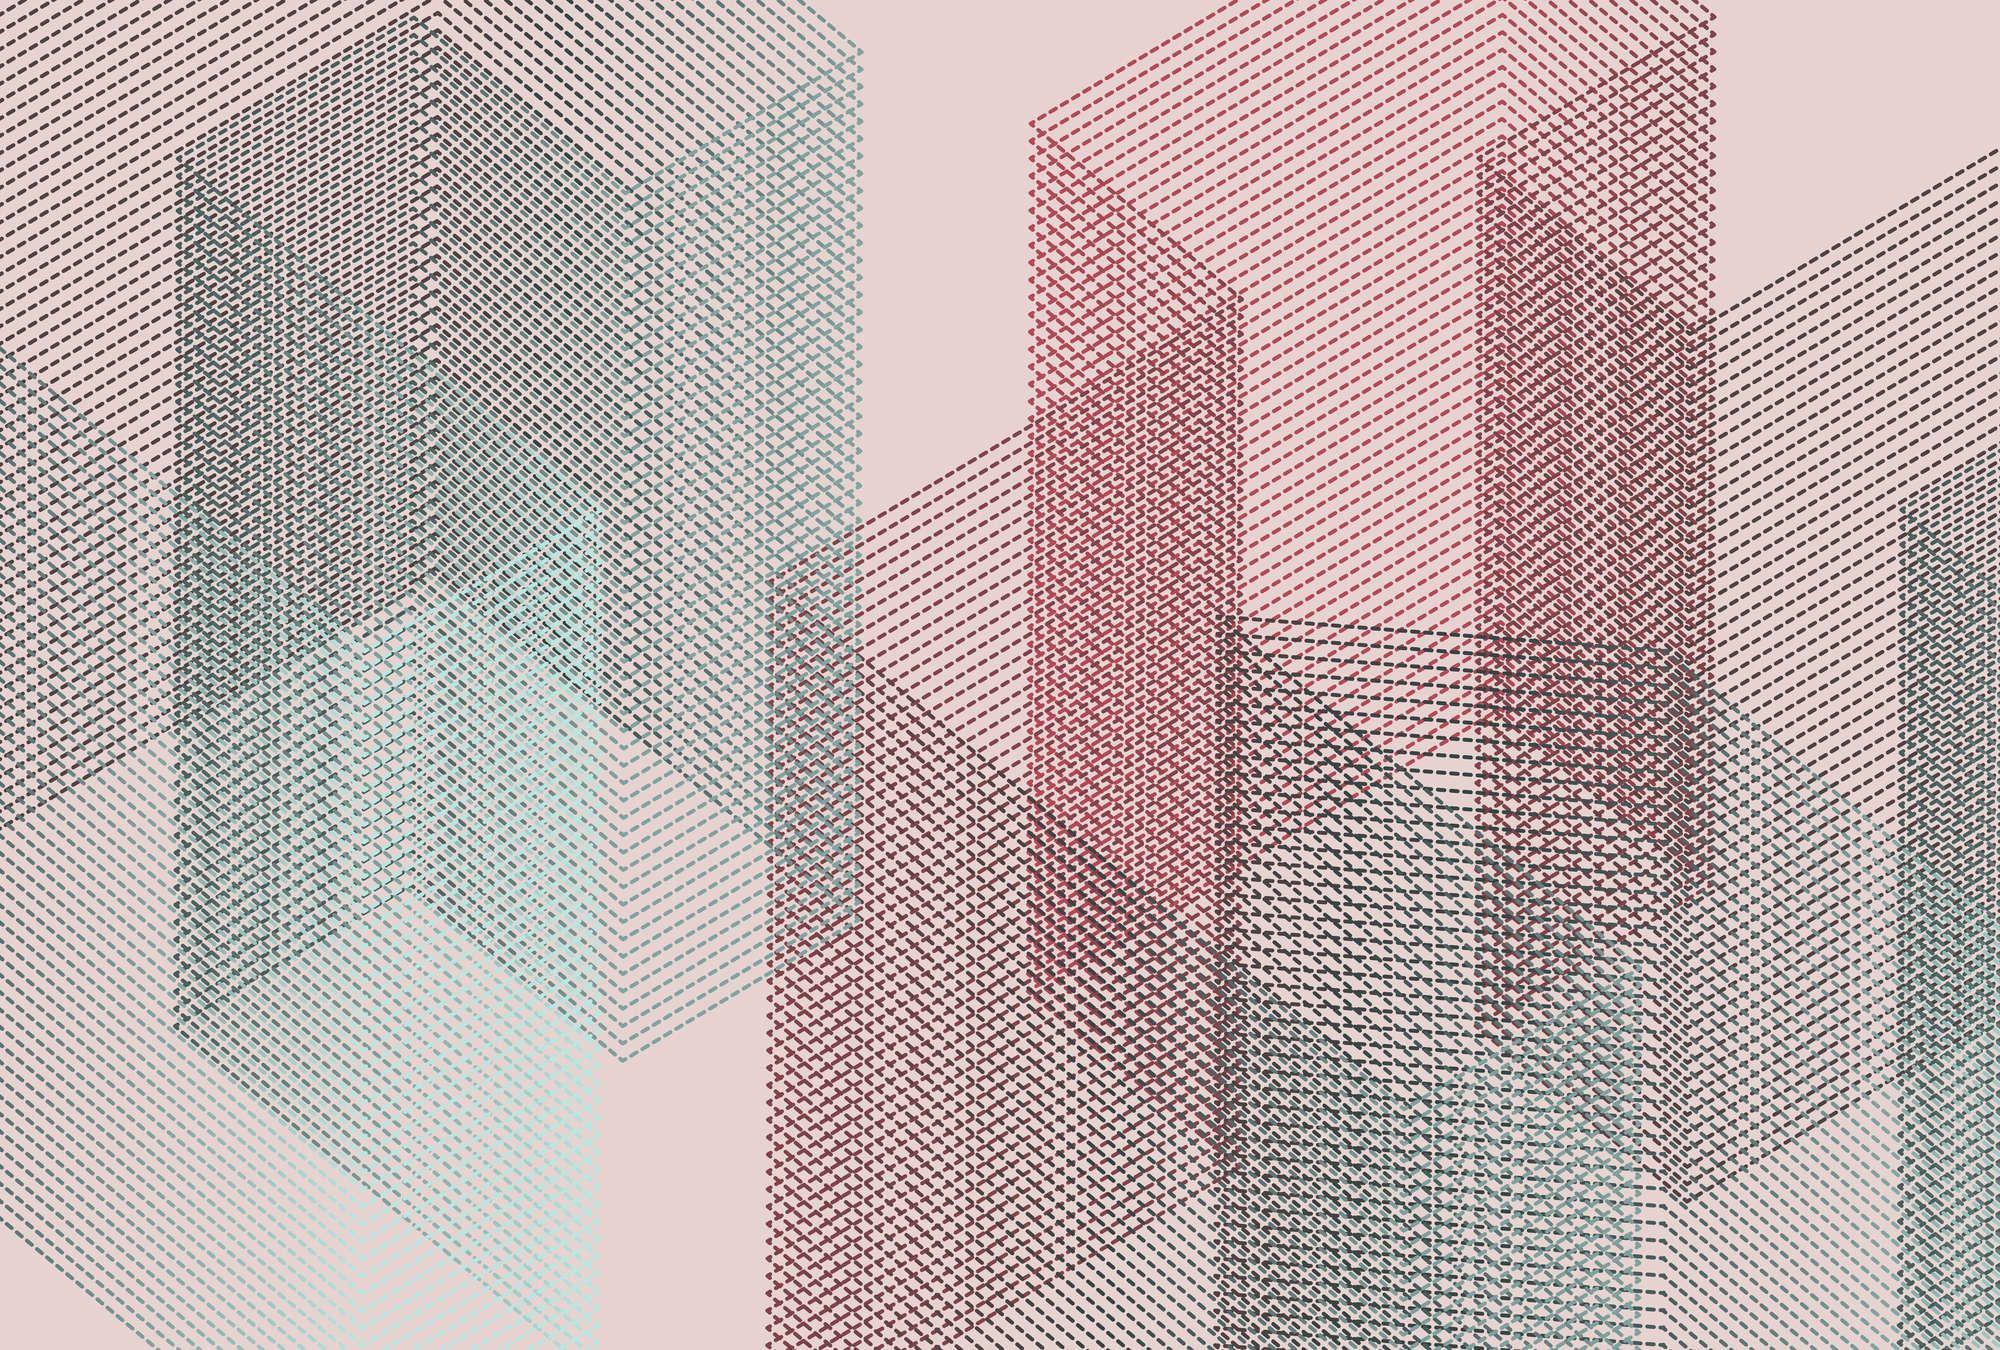             Photo wallpaper »mesh 1« - Abstract 3D design - Red, Blue | Matt, Smooth non-woven fabric
        